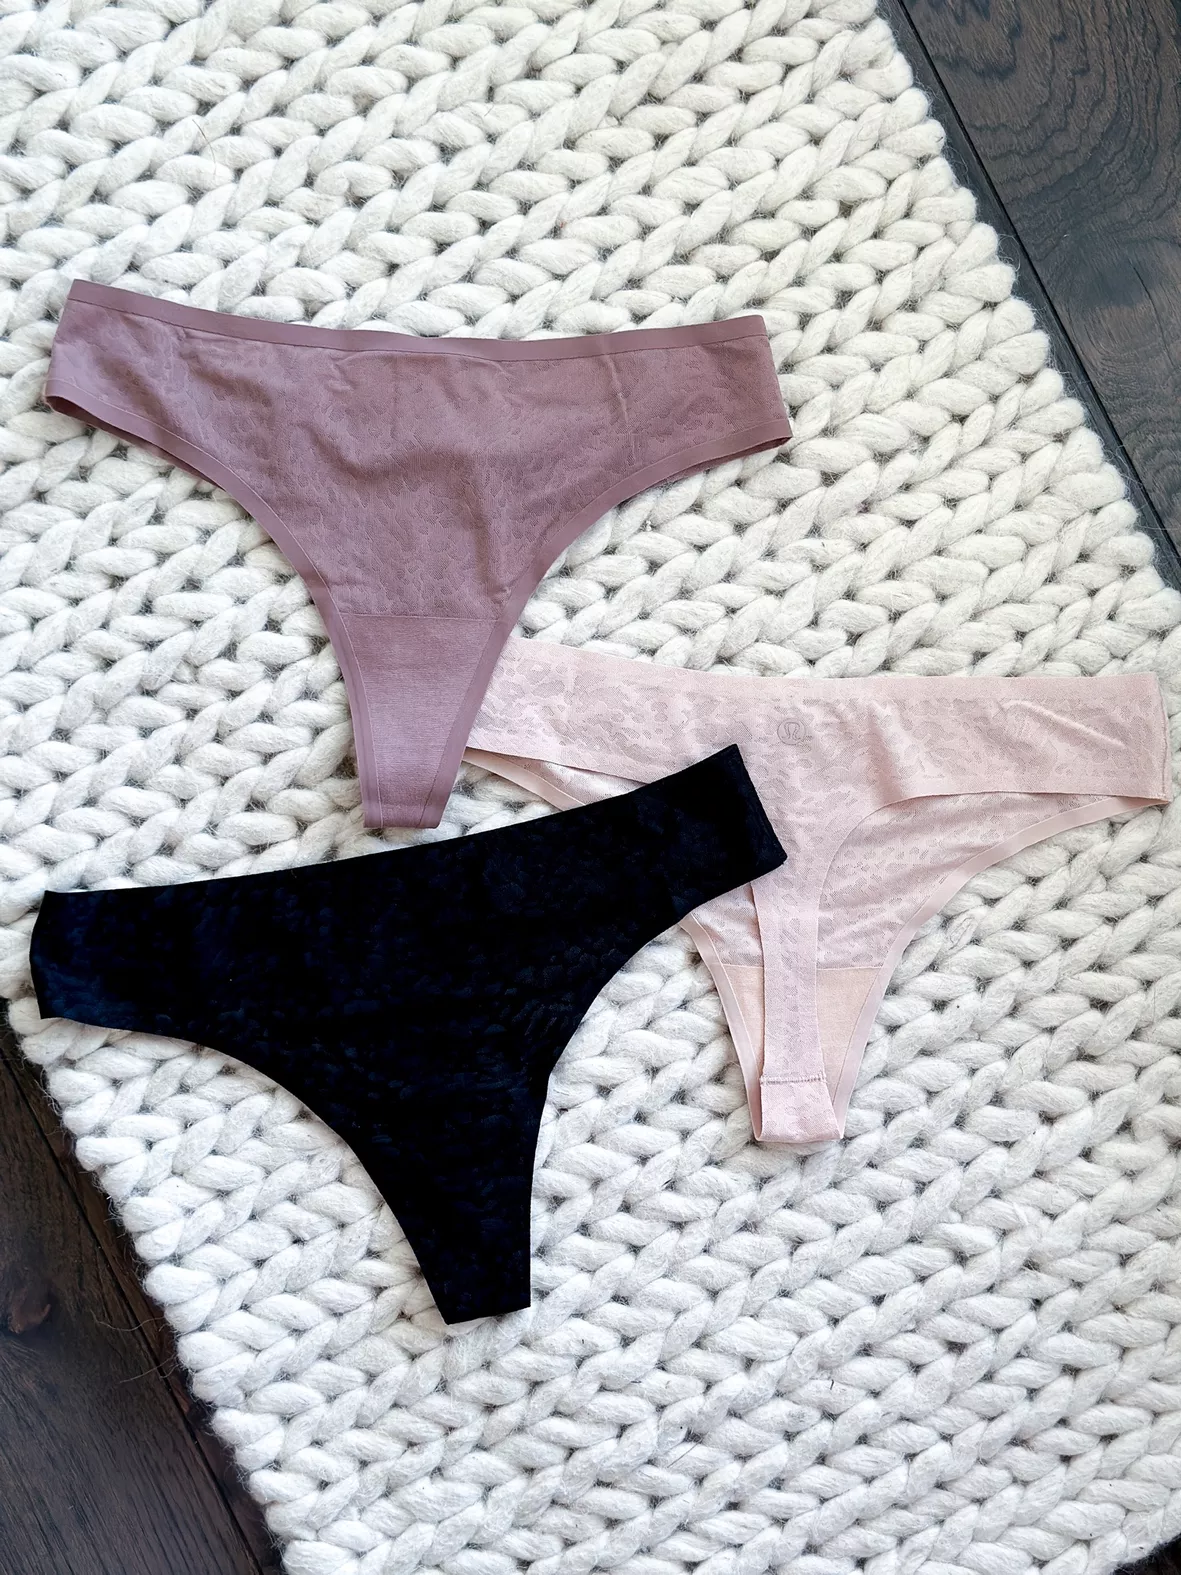 Lululemon thong underwear